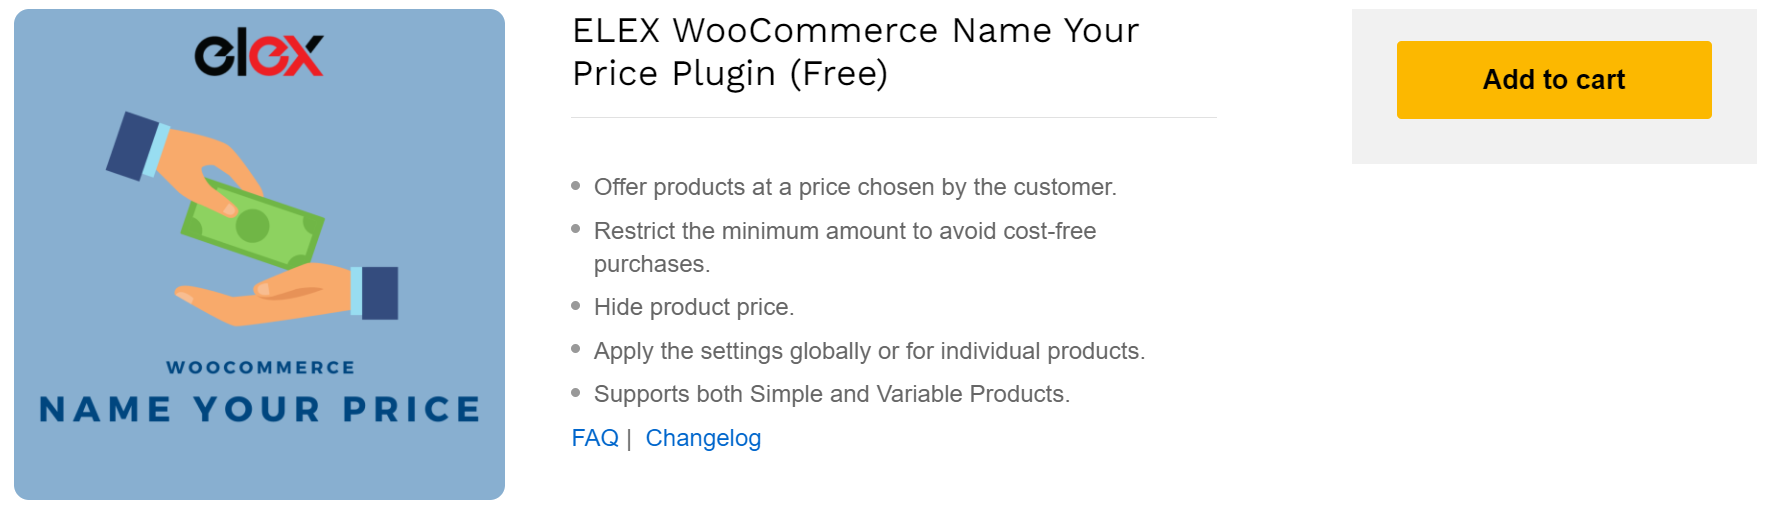 ELEX WooCommerce Name Your Price free plugin